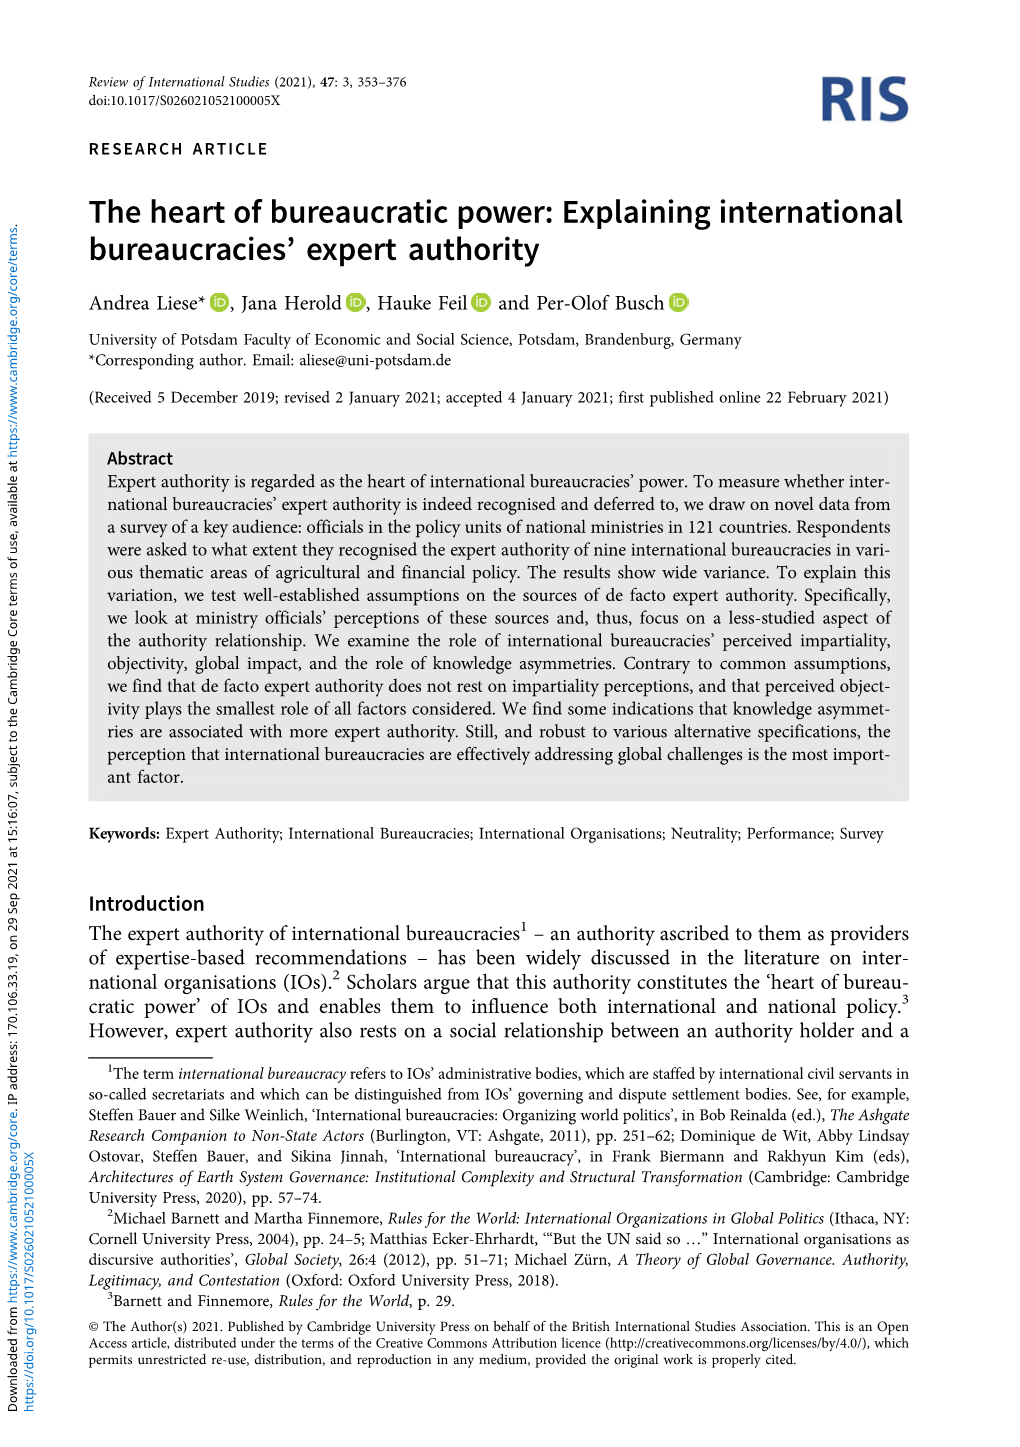 Explaining International Bureaucracies' Expert Authority